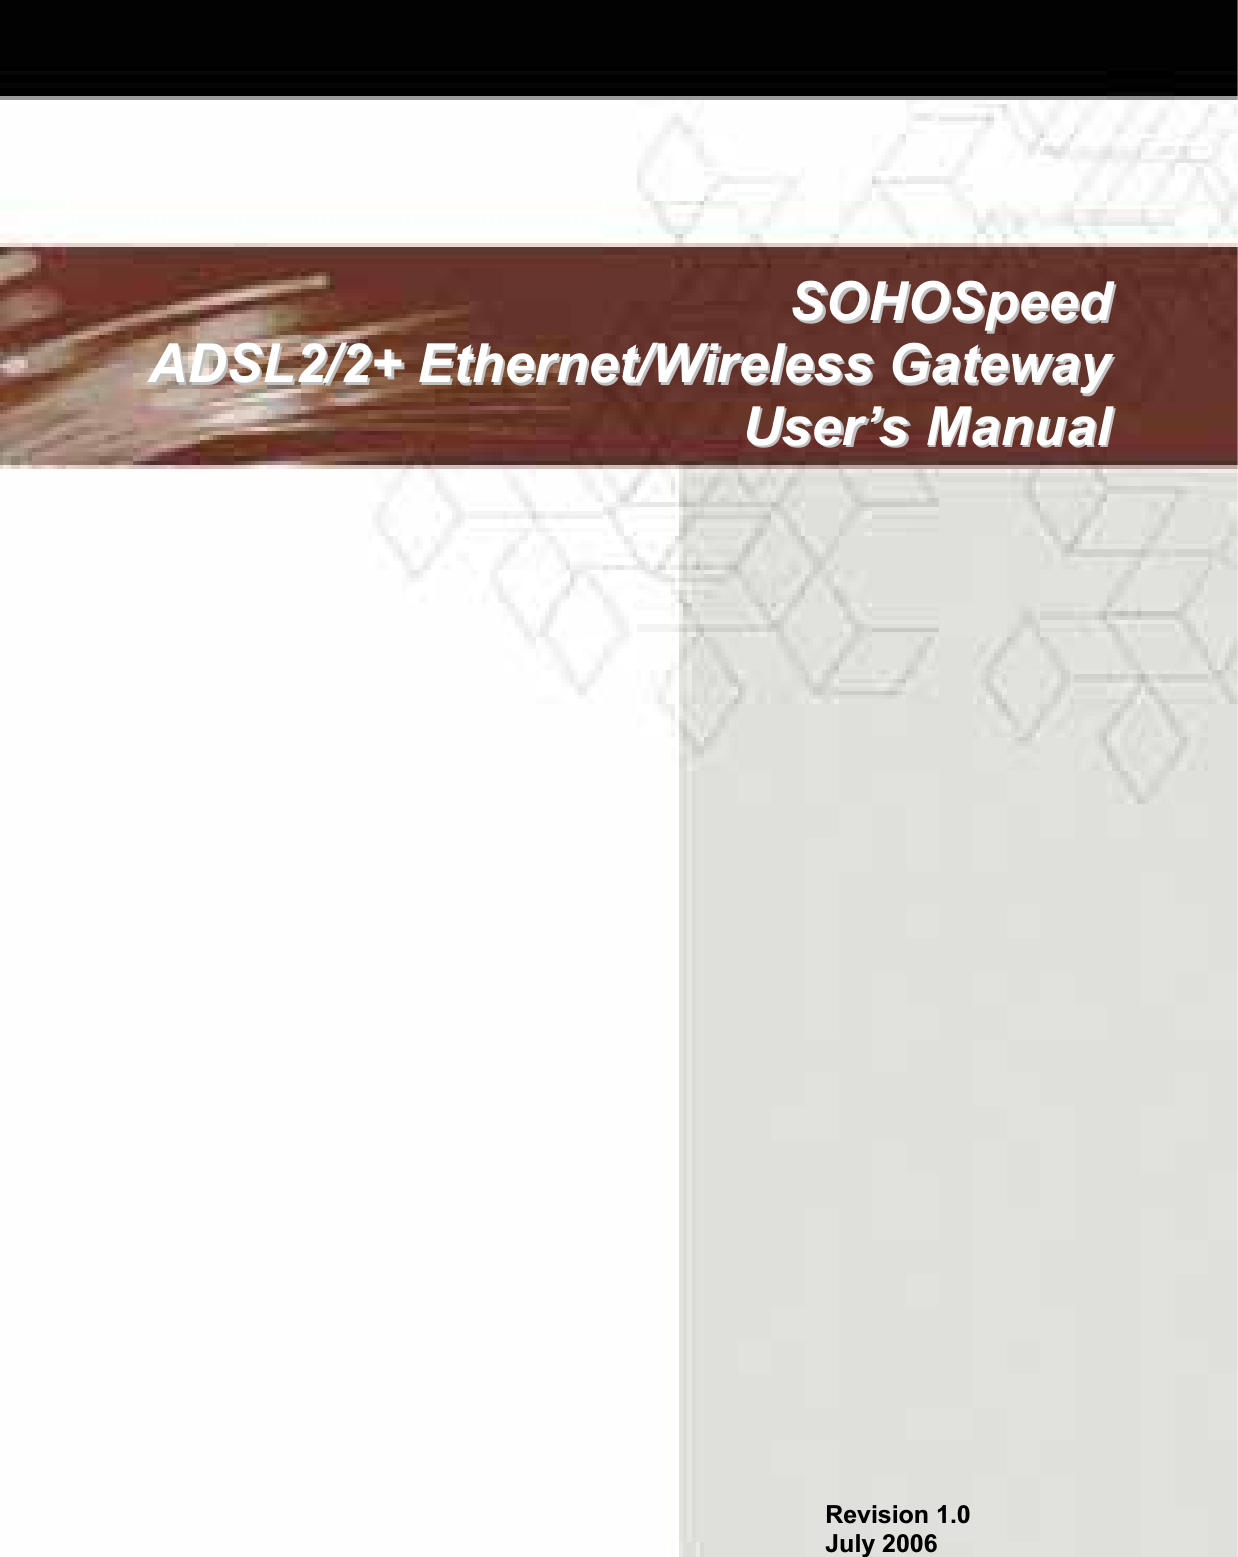 SOHOSpeed ADSL2/2+ Ethernet/Wireless Gateway User’s Manual 0SSOOHHOOSSppeeeeddAADDSSLL22//22++EEtthheerrnneett//WWiirreelleessssGGaatteewwaayyUUsseerr’’ssMMaannuuaallRevision 1.0 July 2006 